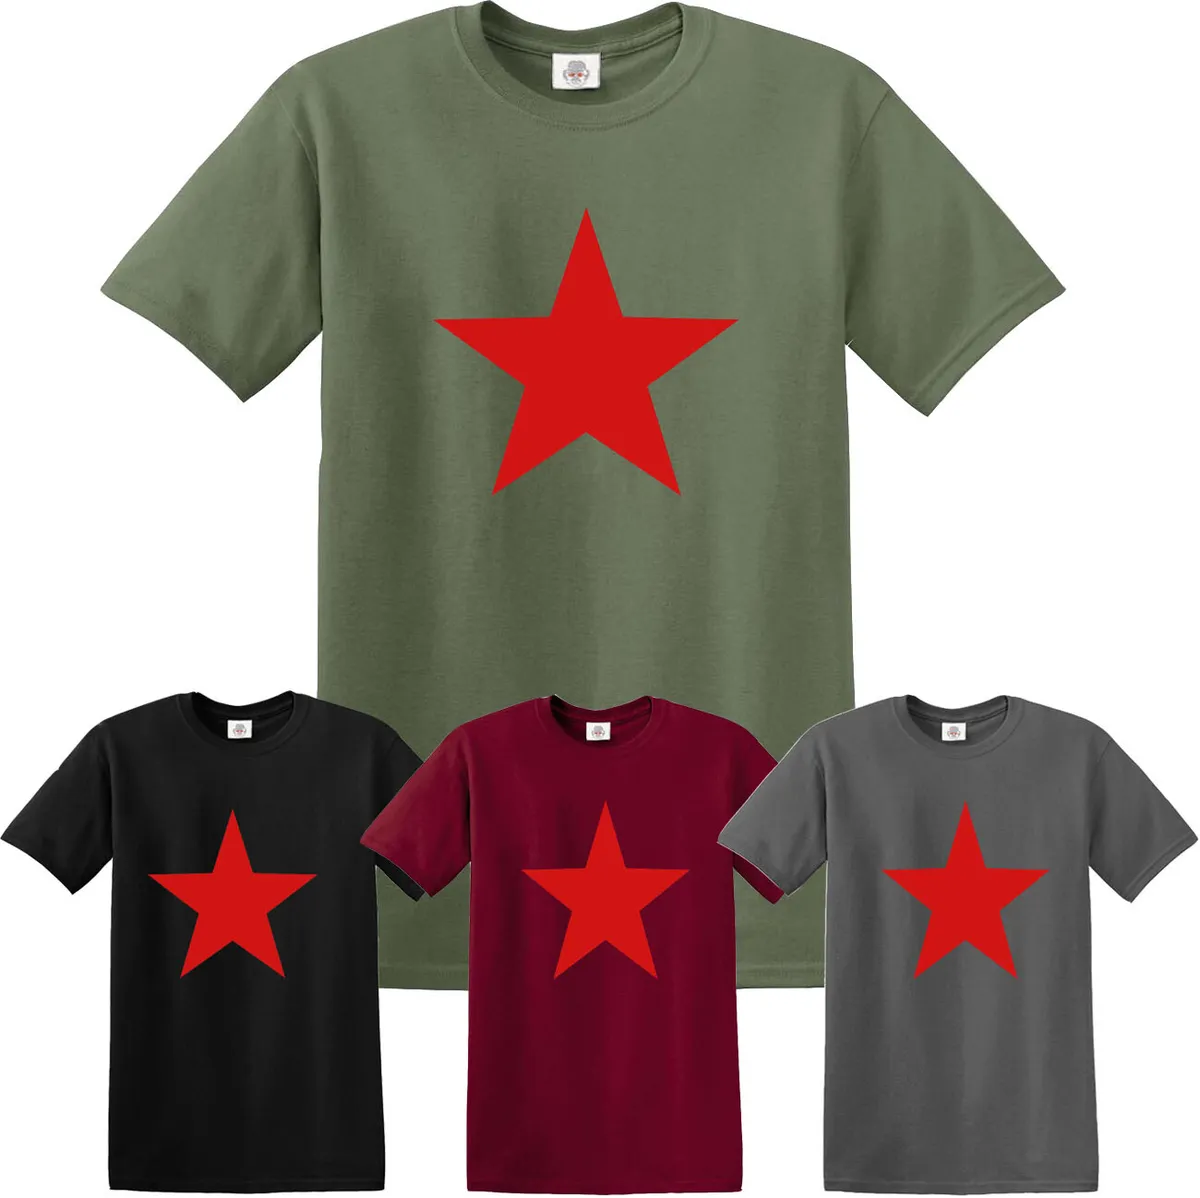 Roter Stern Sowjet Union T-Shirt Che Guerra Kommunistische USSR Cccp  Revolution | eBay